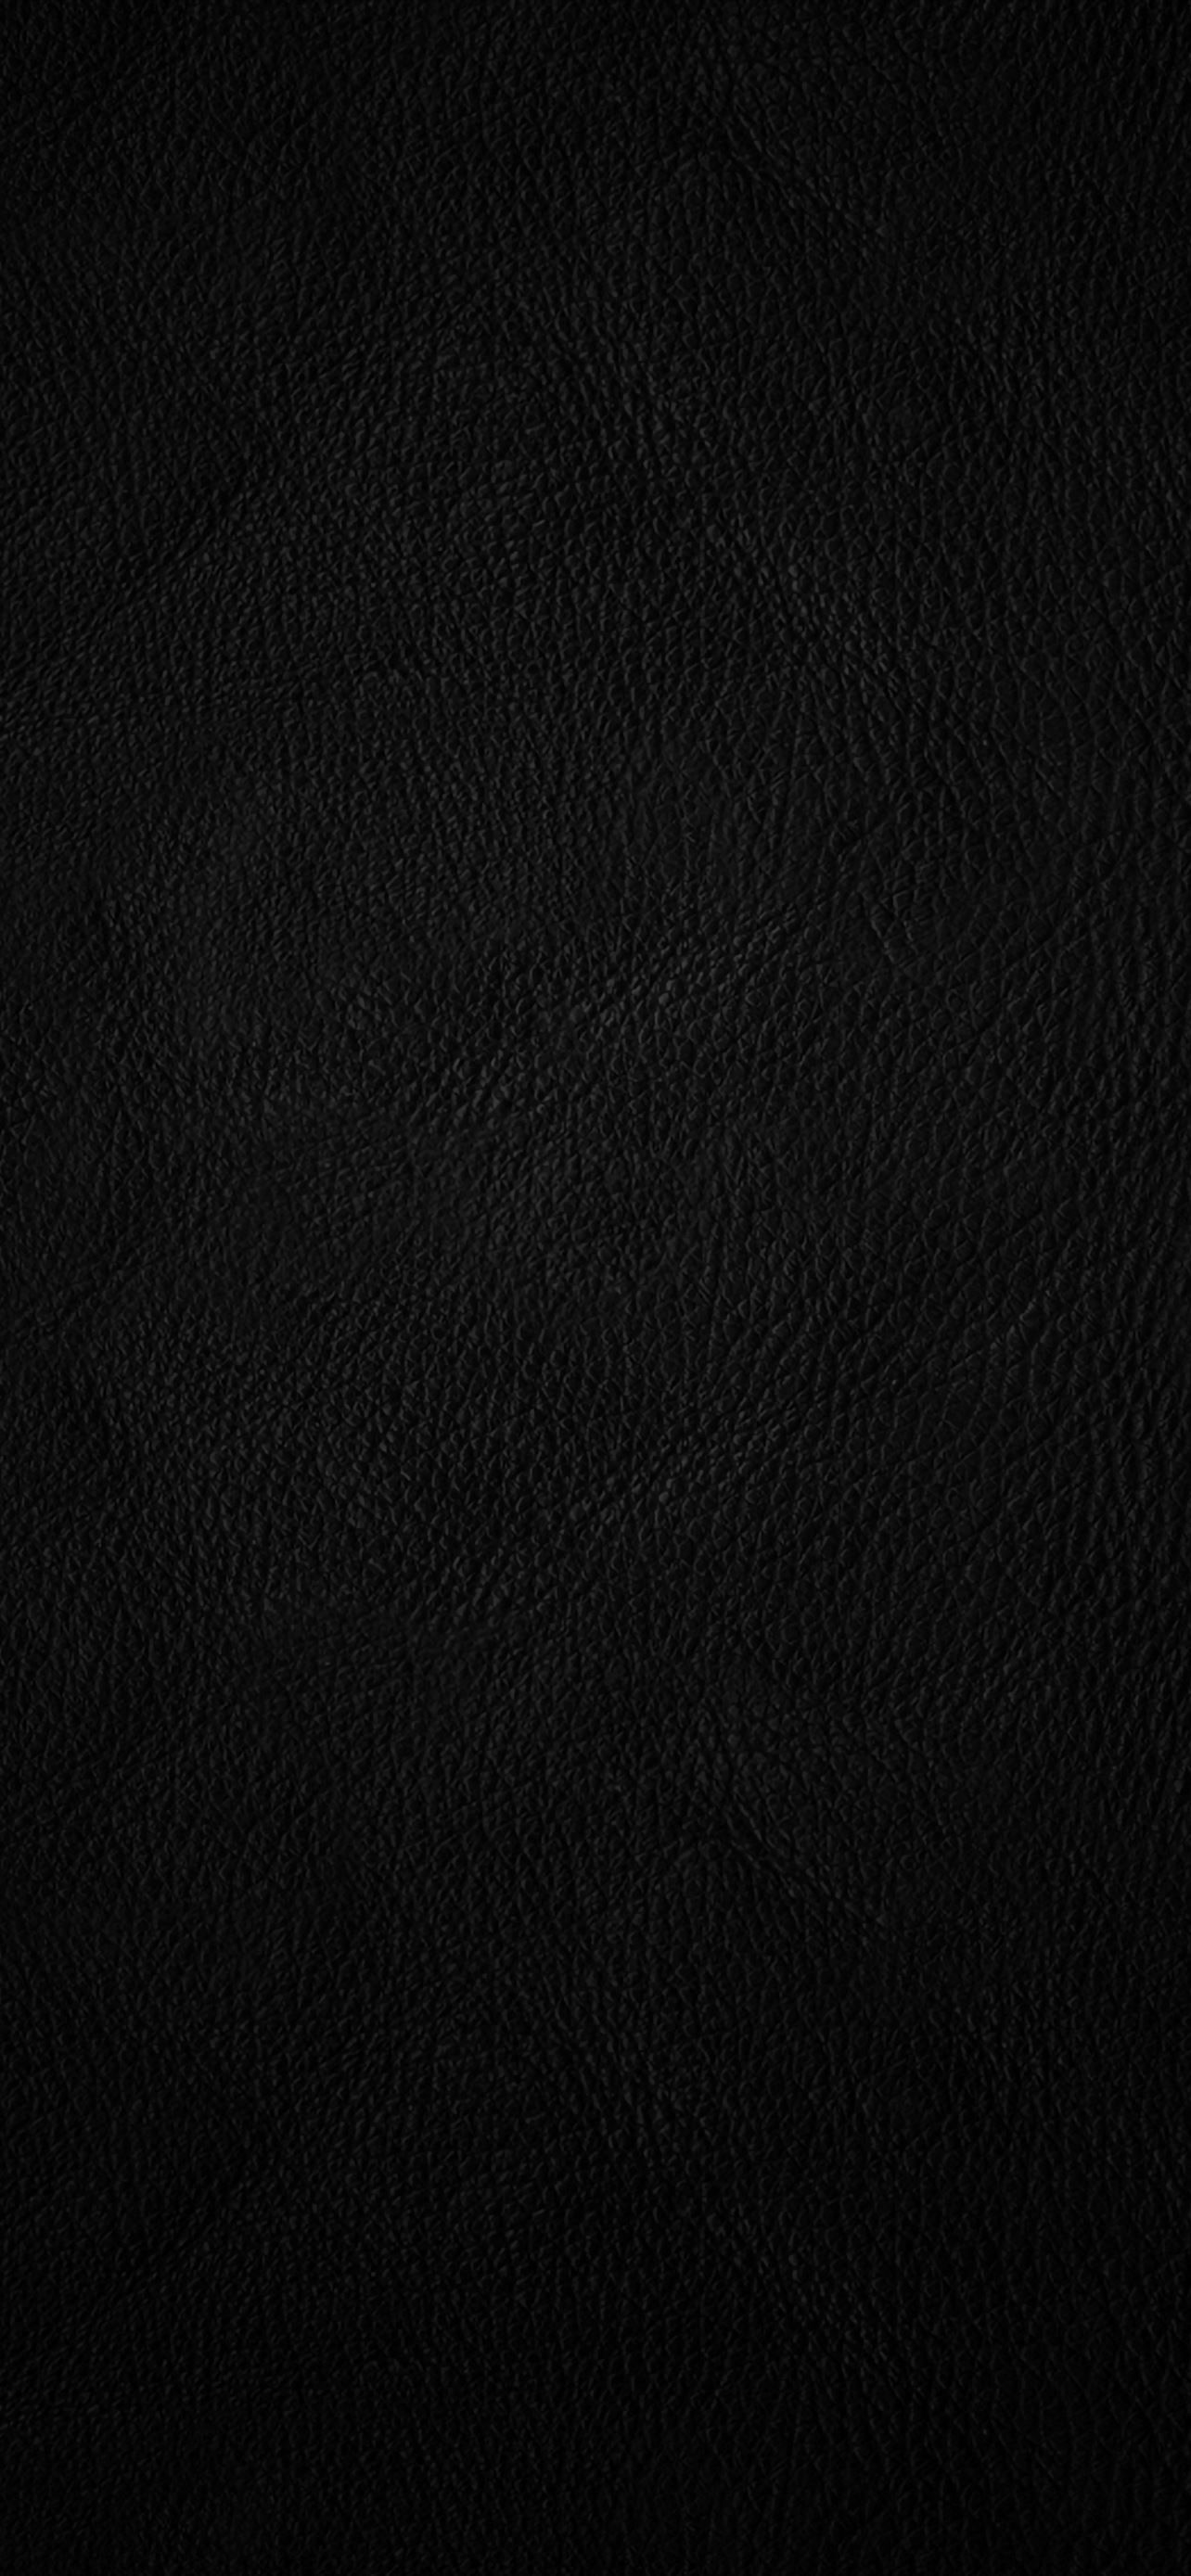  Leder Hintergrundbild 1284x2778. Black leather iPhone Wallpaper Free Download